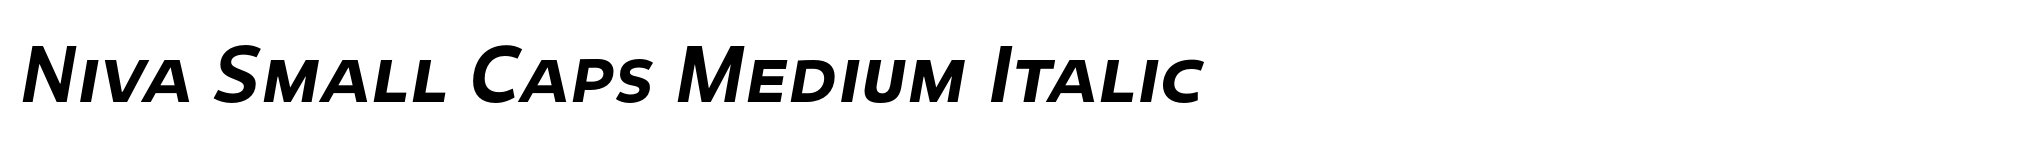 Niva Small Caps Medium Italic image